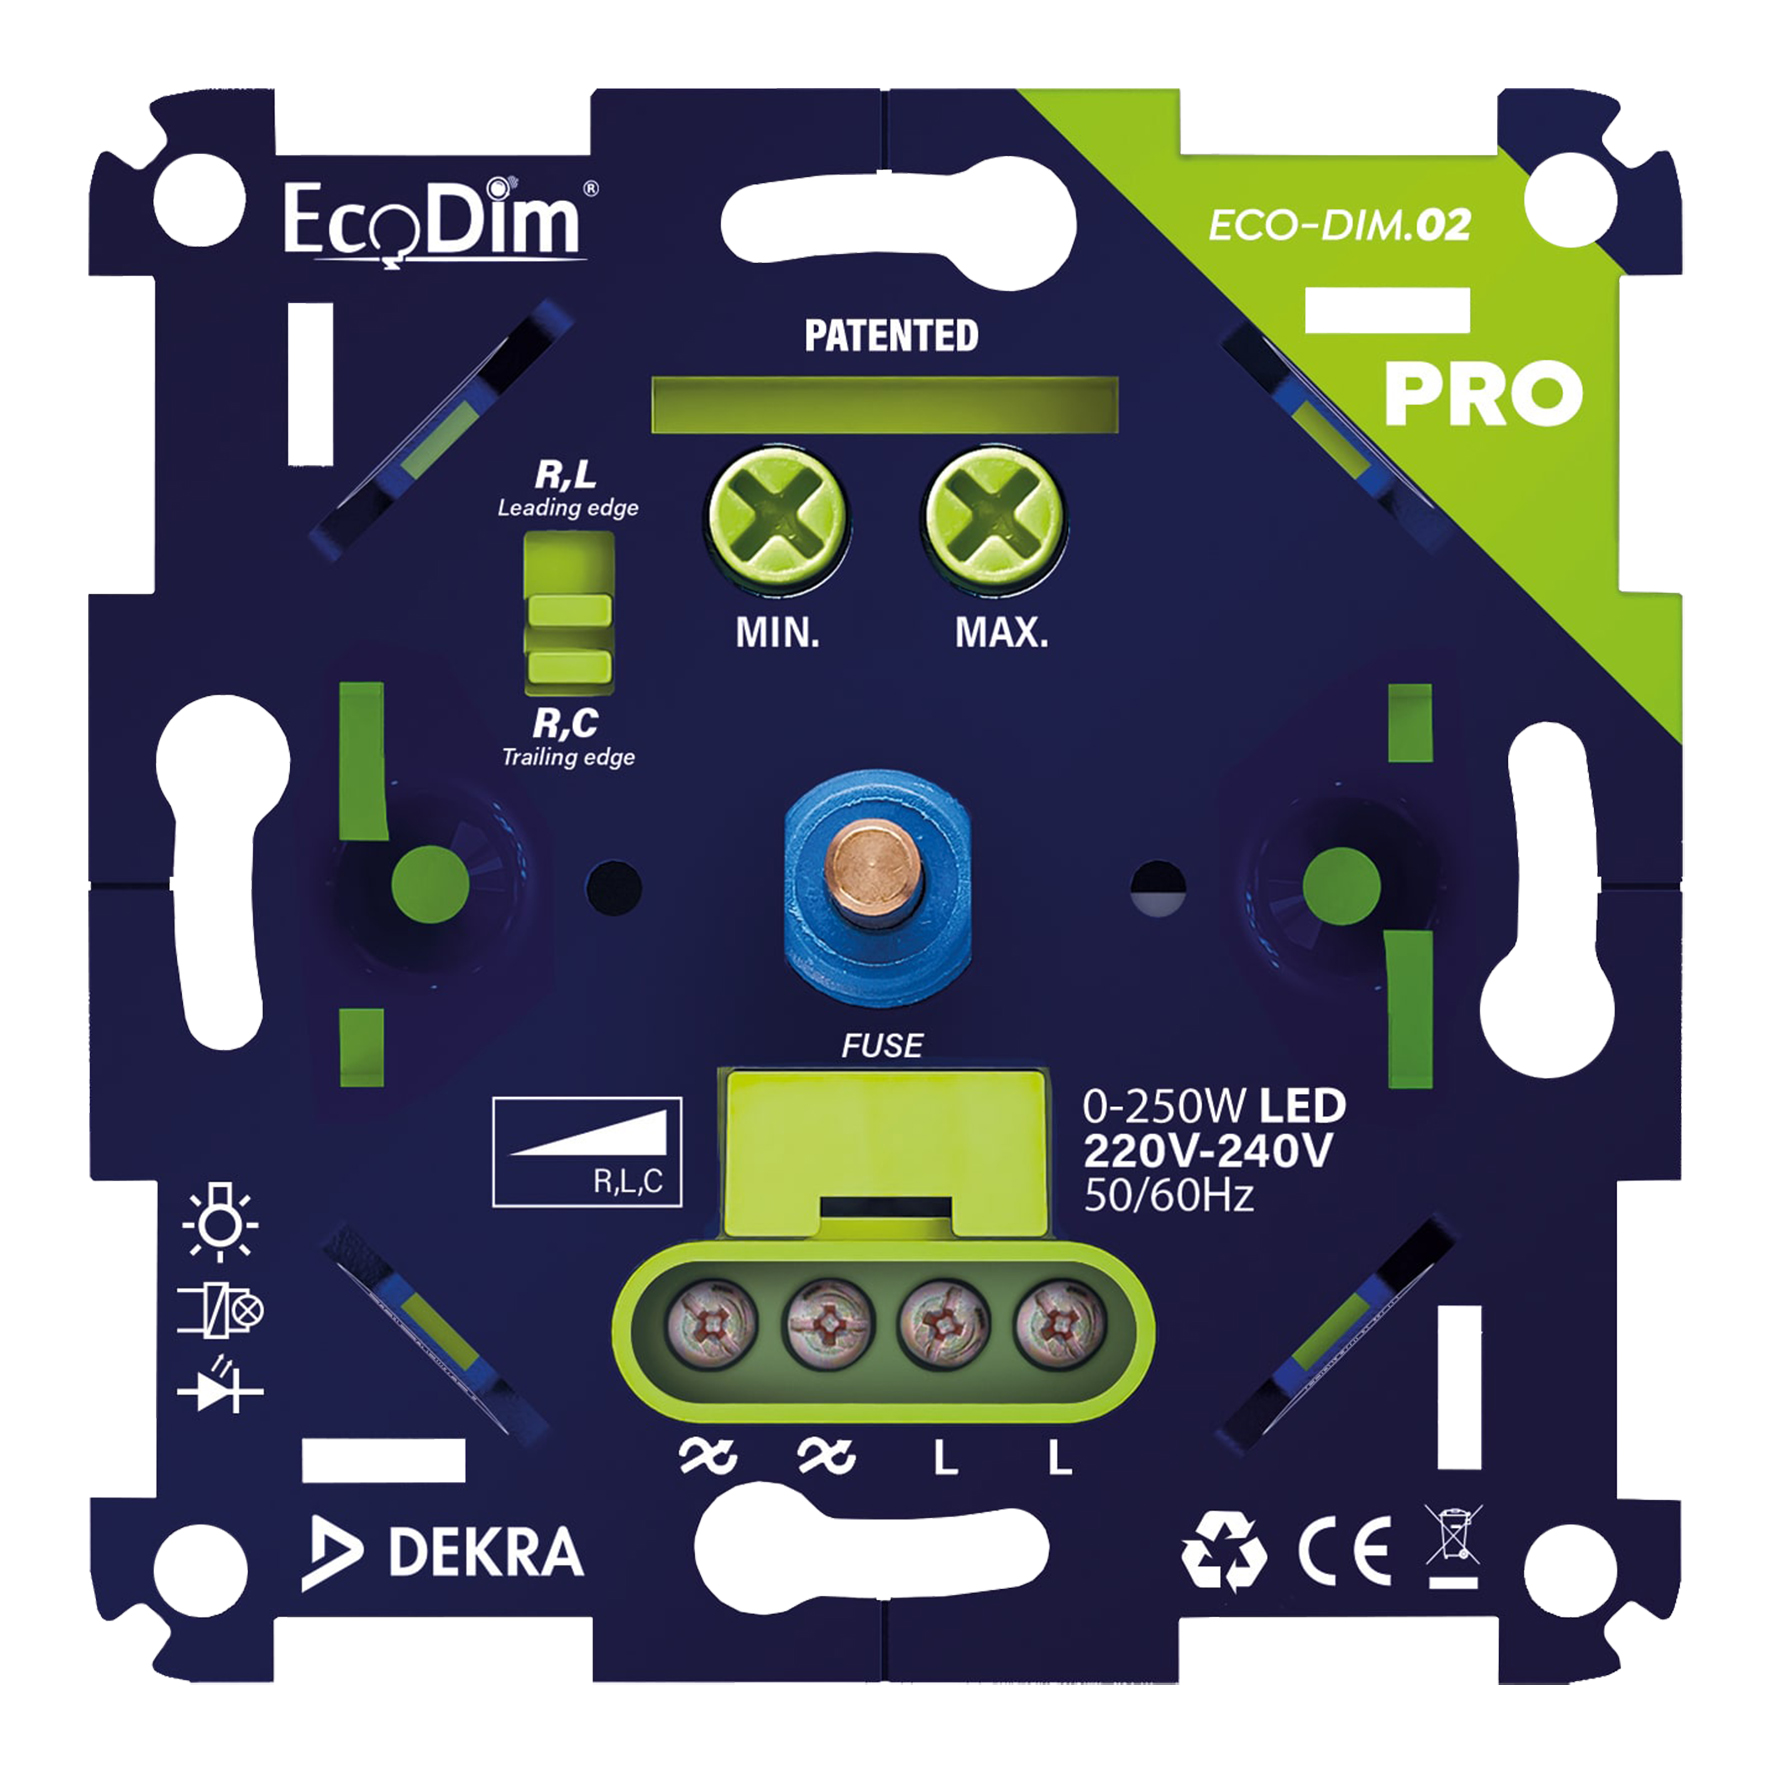 EcoDim ECO-DIM.02 PRO LED Dimmer 0-250W (RLC)